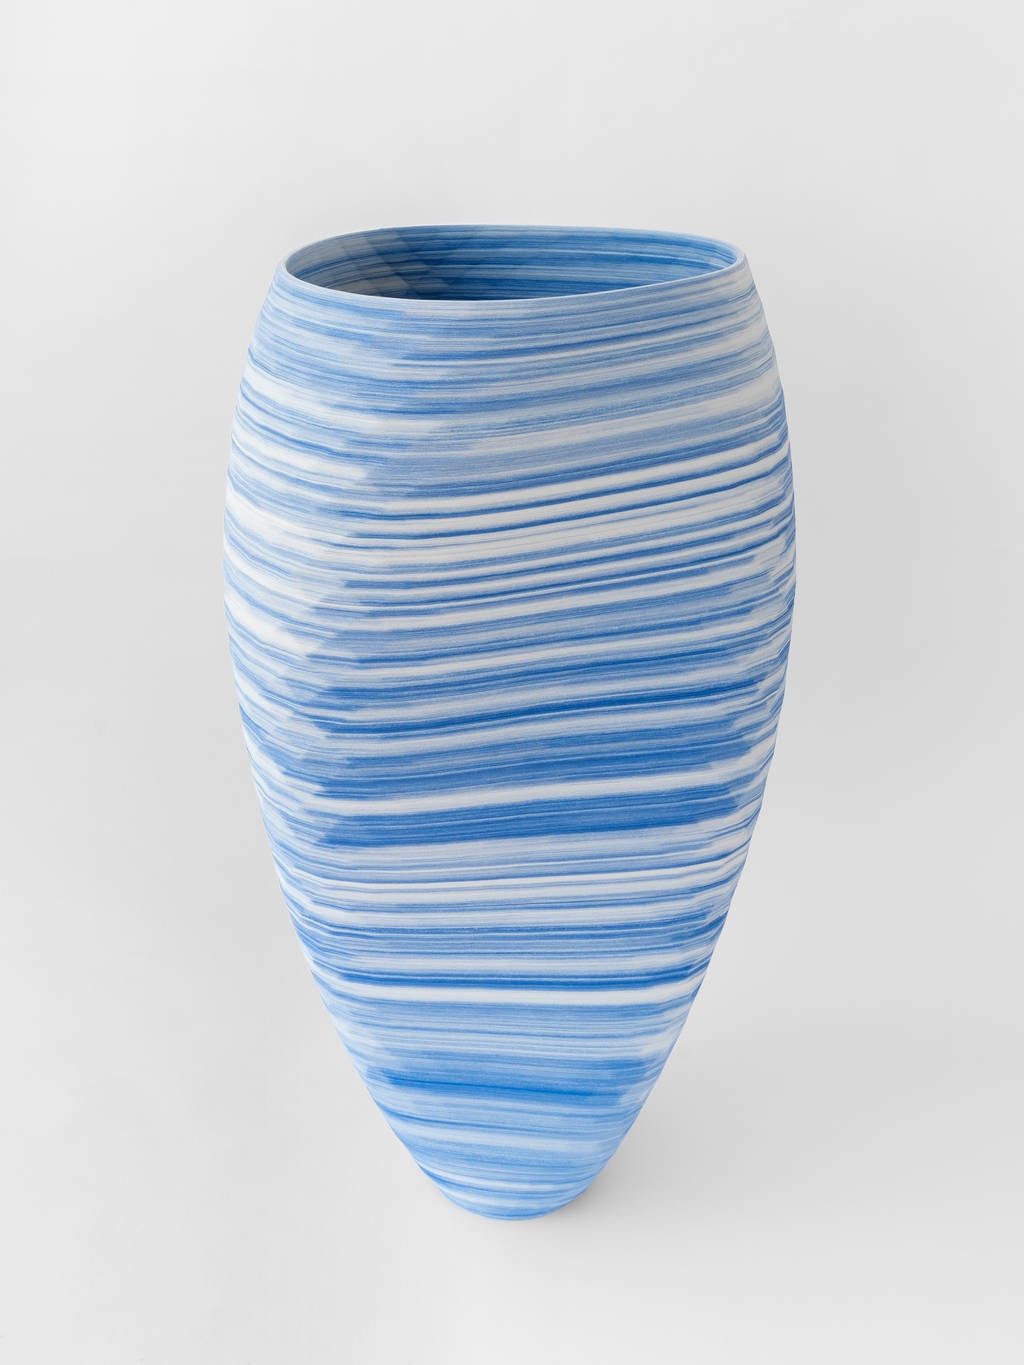 Blue and White porcelain